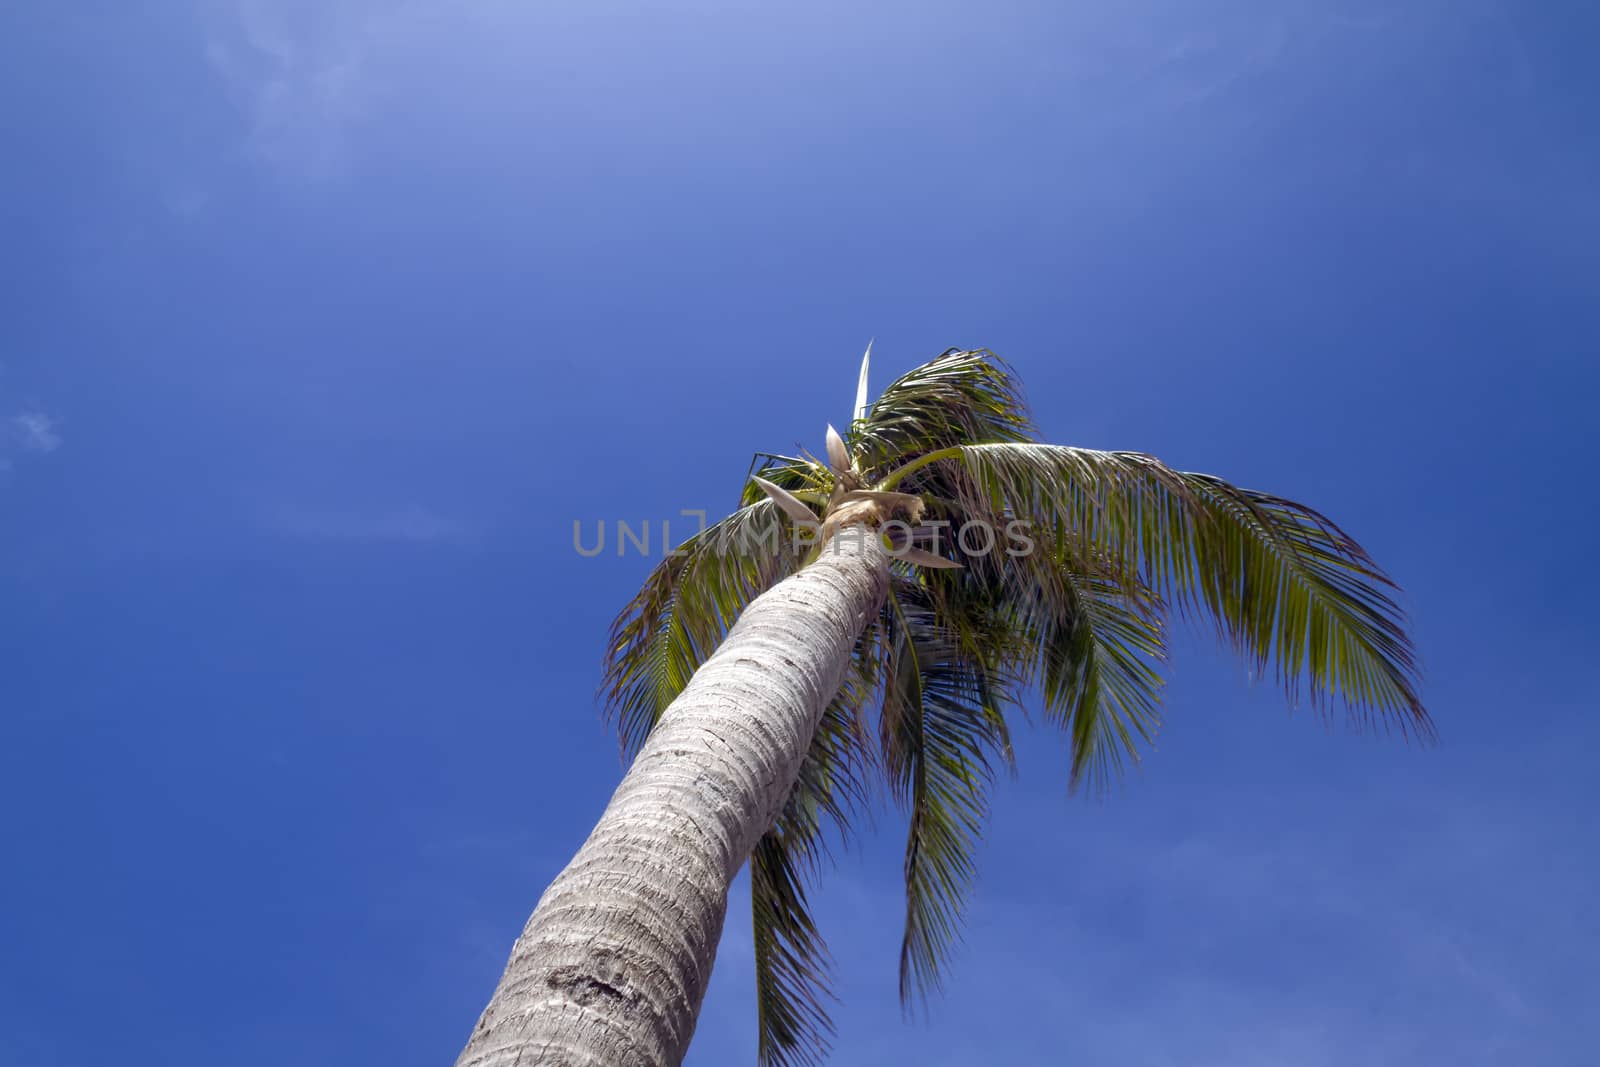 Tall Palm Tree by Moonb007